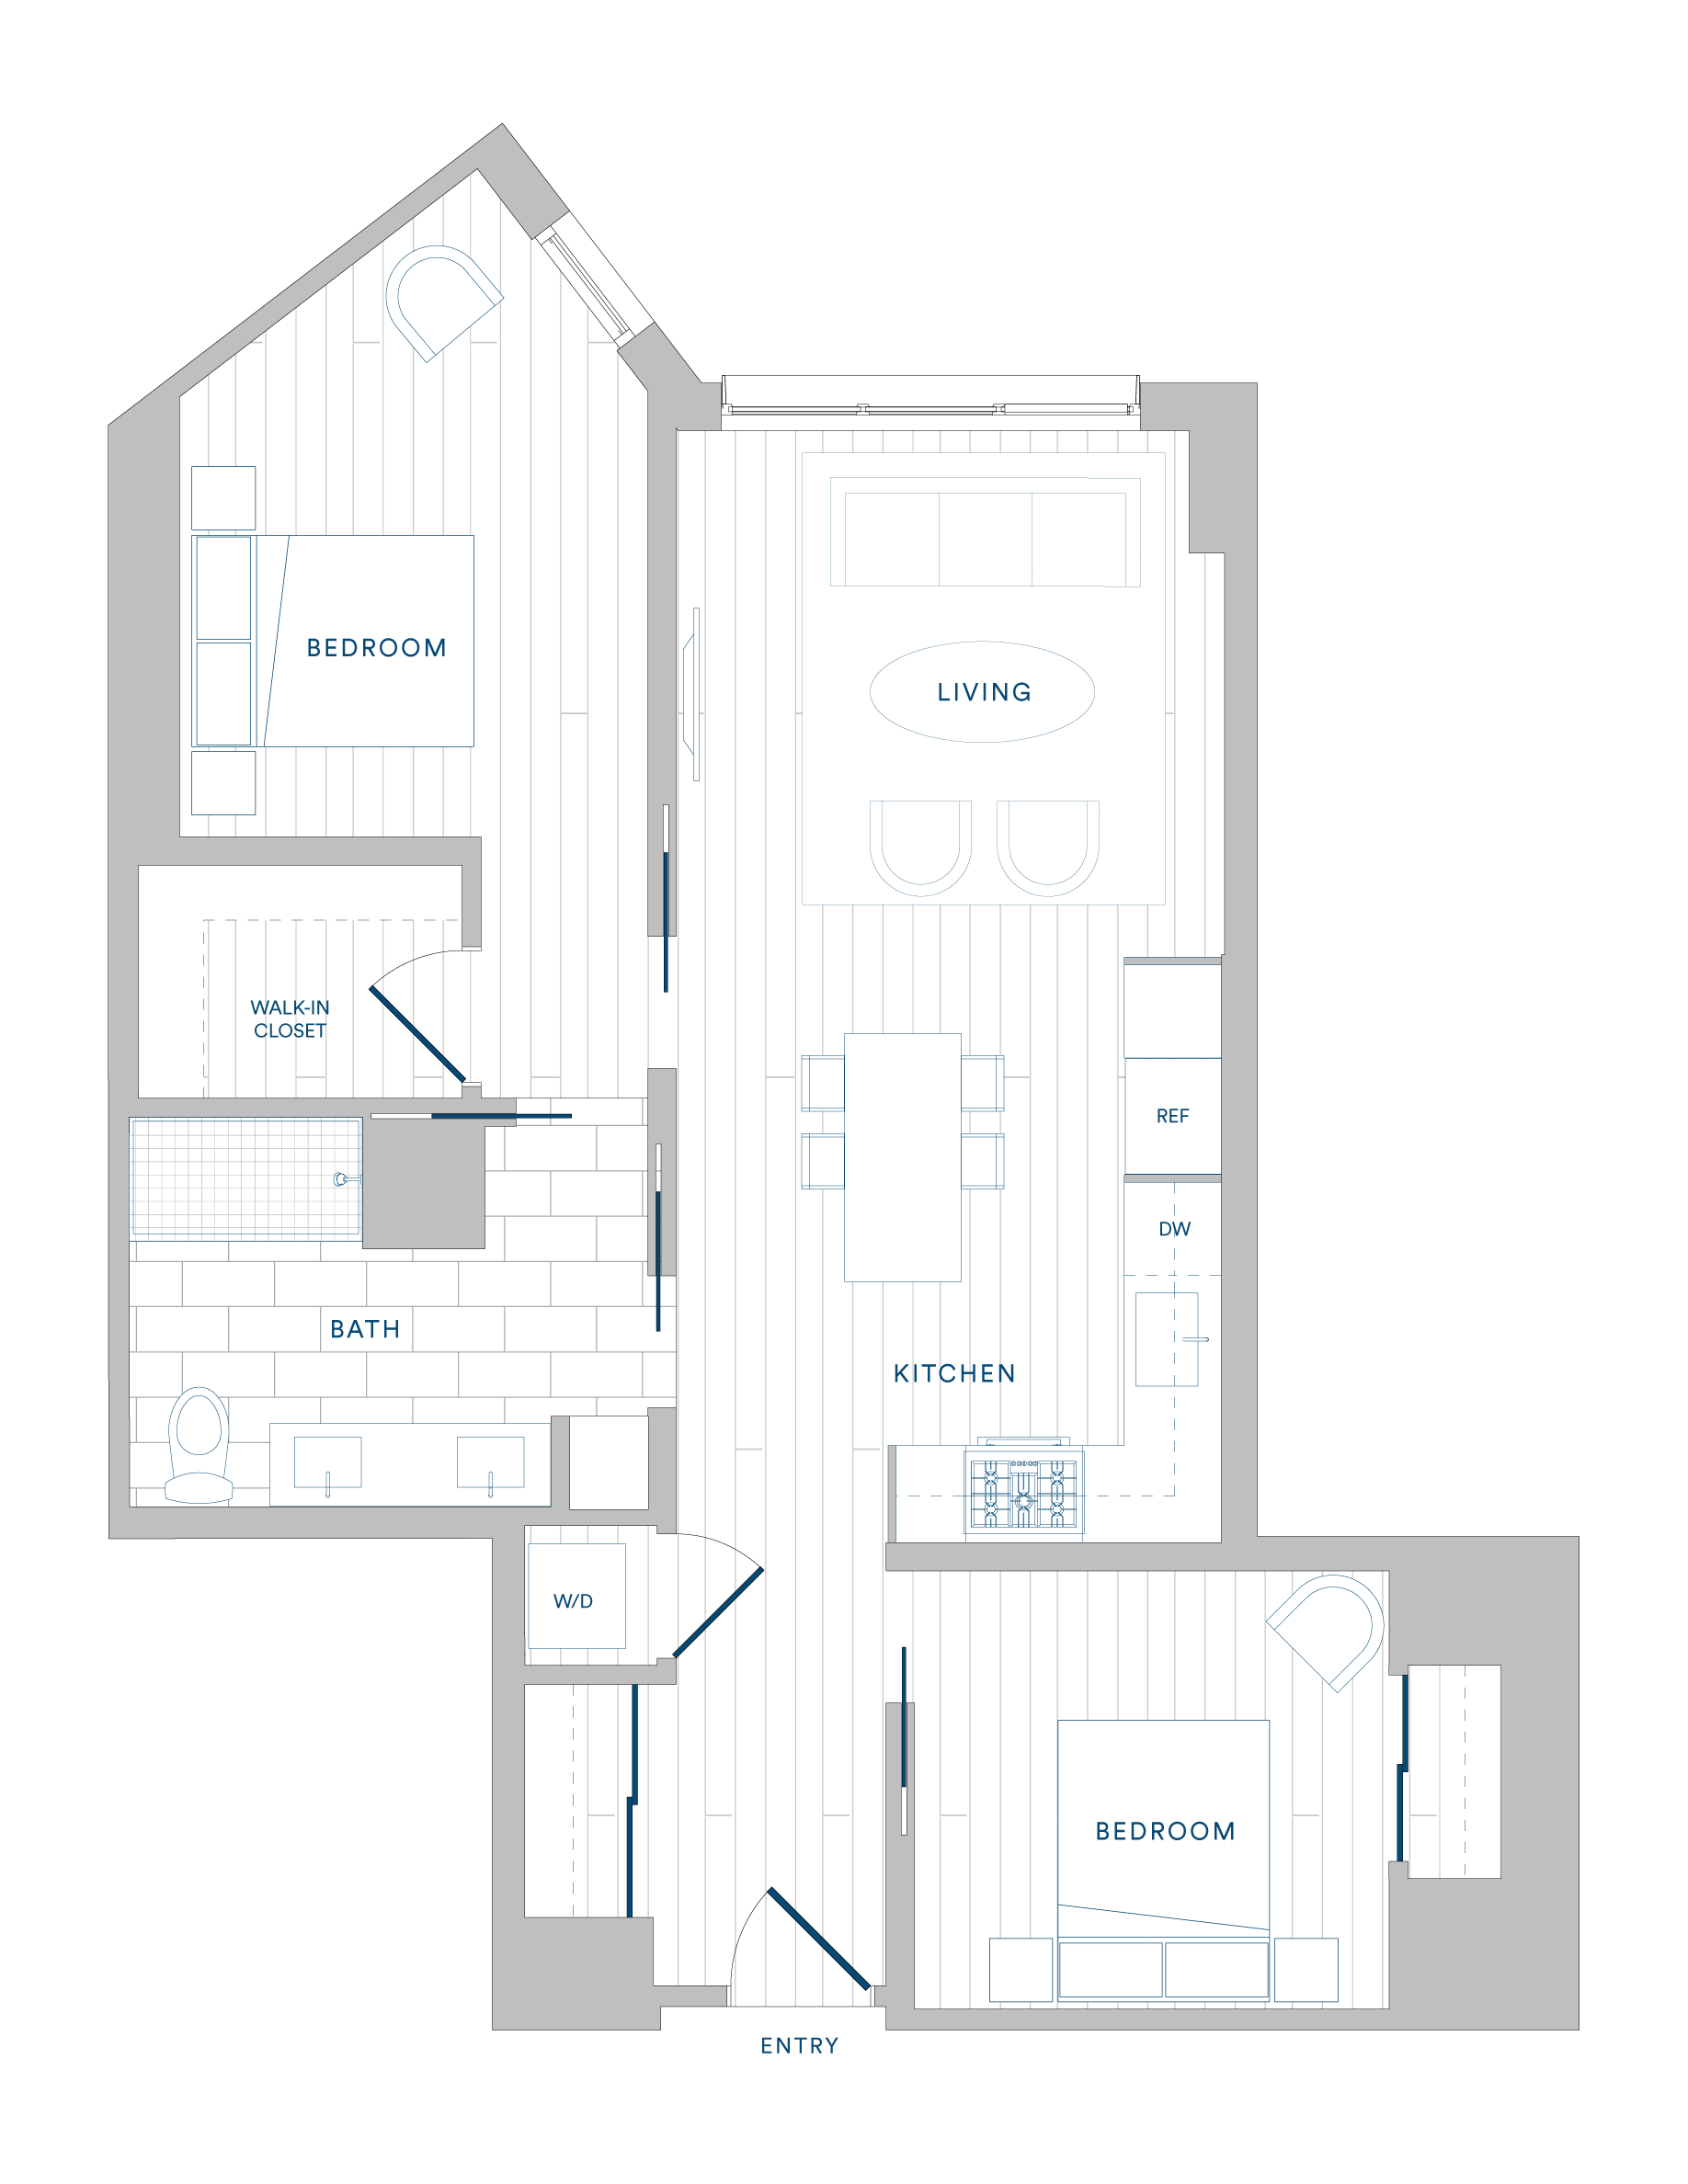 Floorplan for Apartment #701, 2 bedroom unit at Margarite